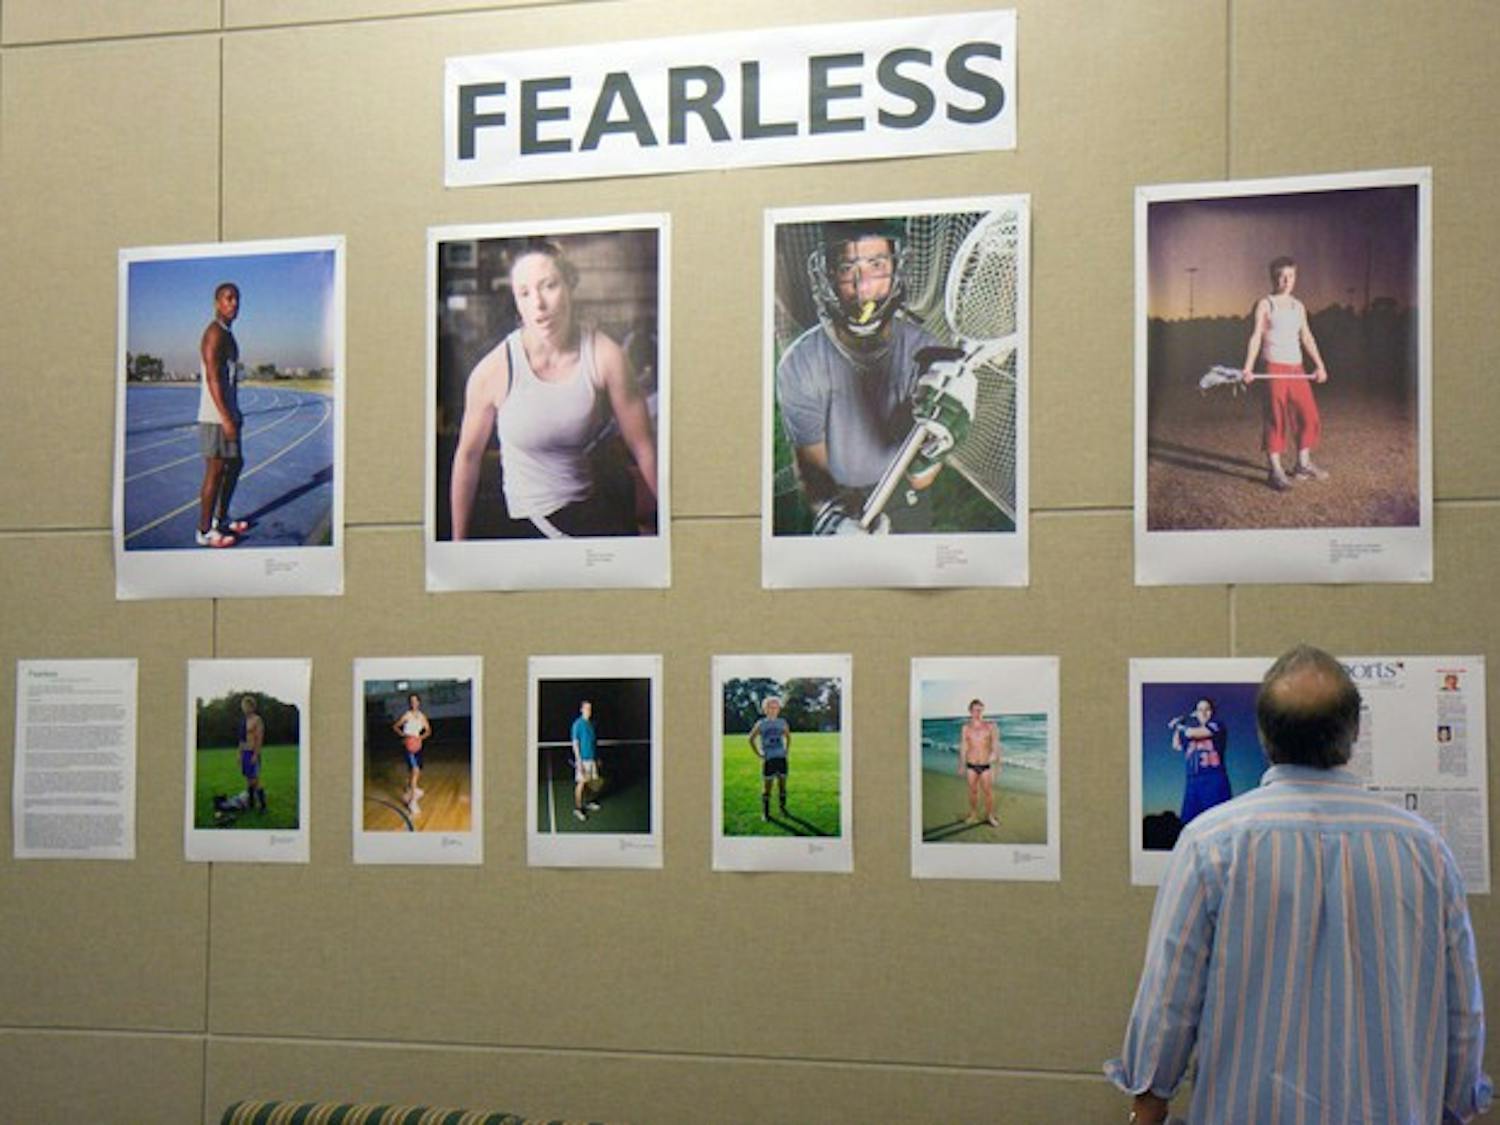 University of California at Santa Barbara lecturer Jeff Sheng's photography exhibit of gay athletes is on display here at Alumni Gym.